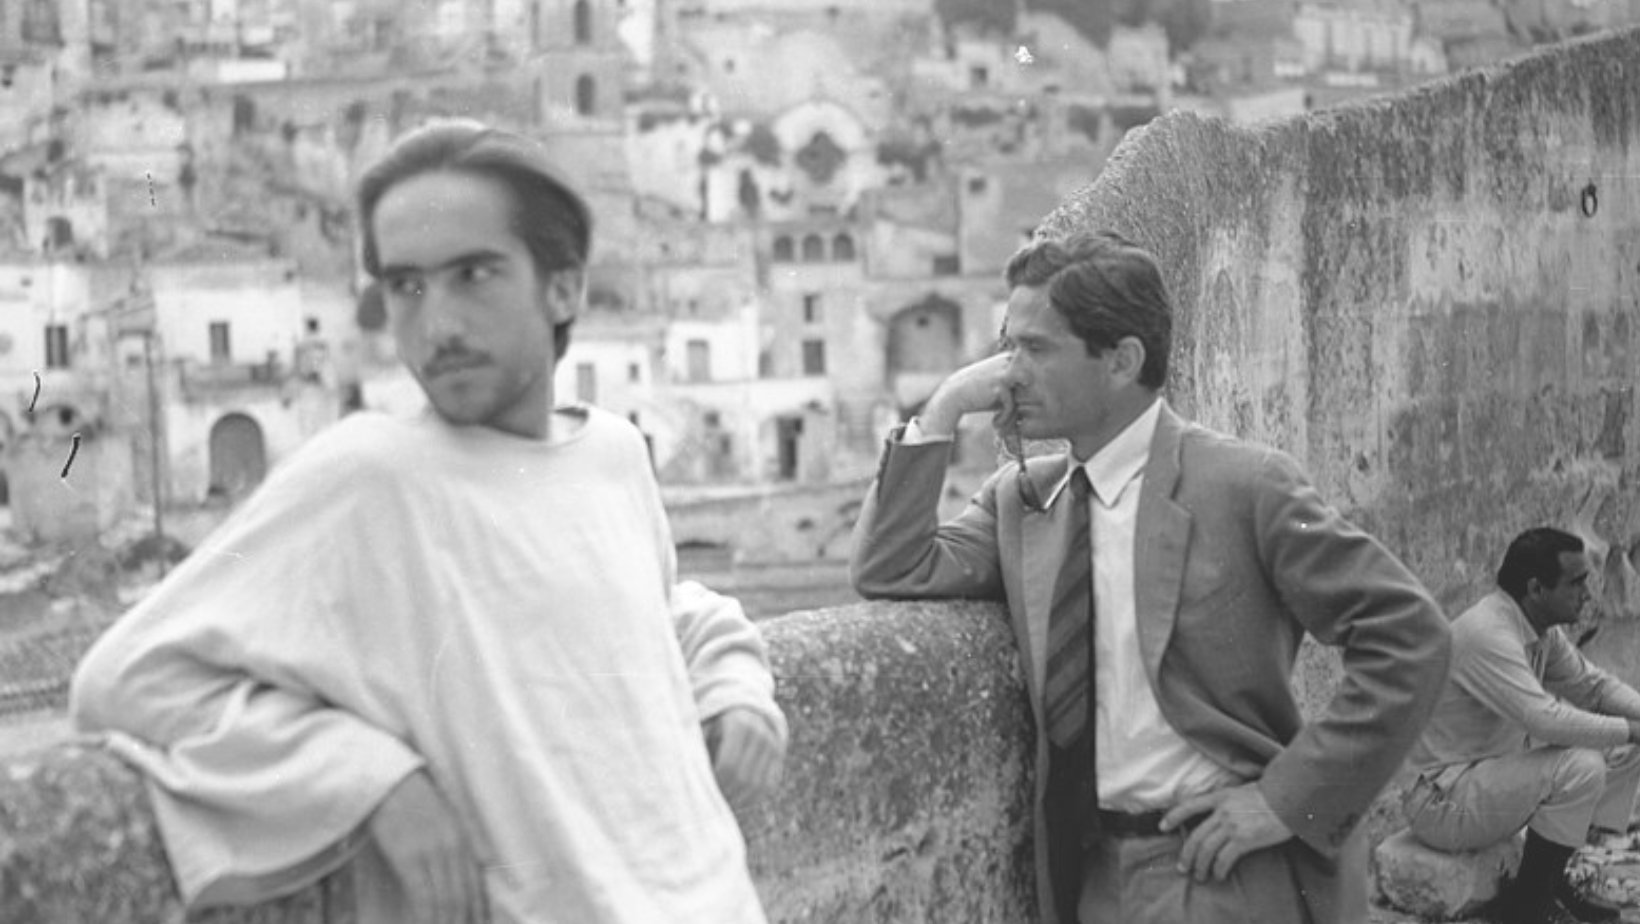 A Voghera una mostra fotografica per i 100 anni di Pasolini